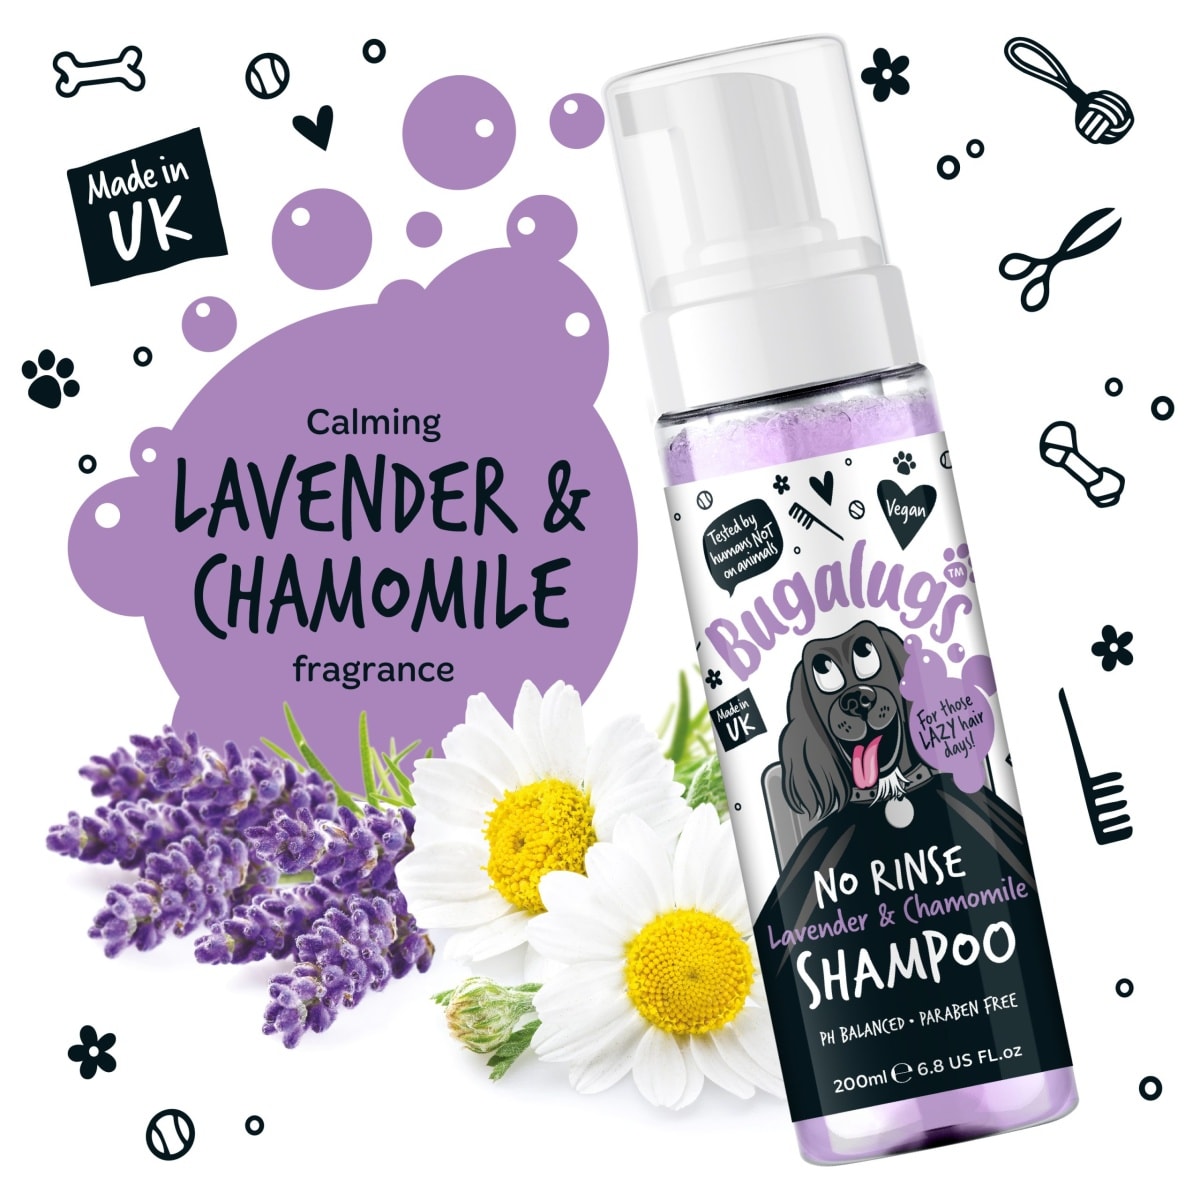 Bugalugs - No Rinse Lavender & Chamomile Shampoo 200ml Main Image